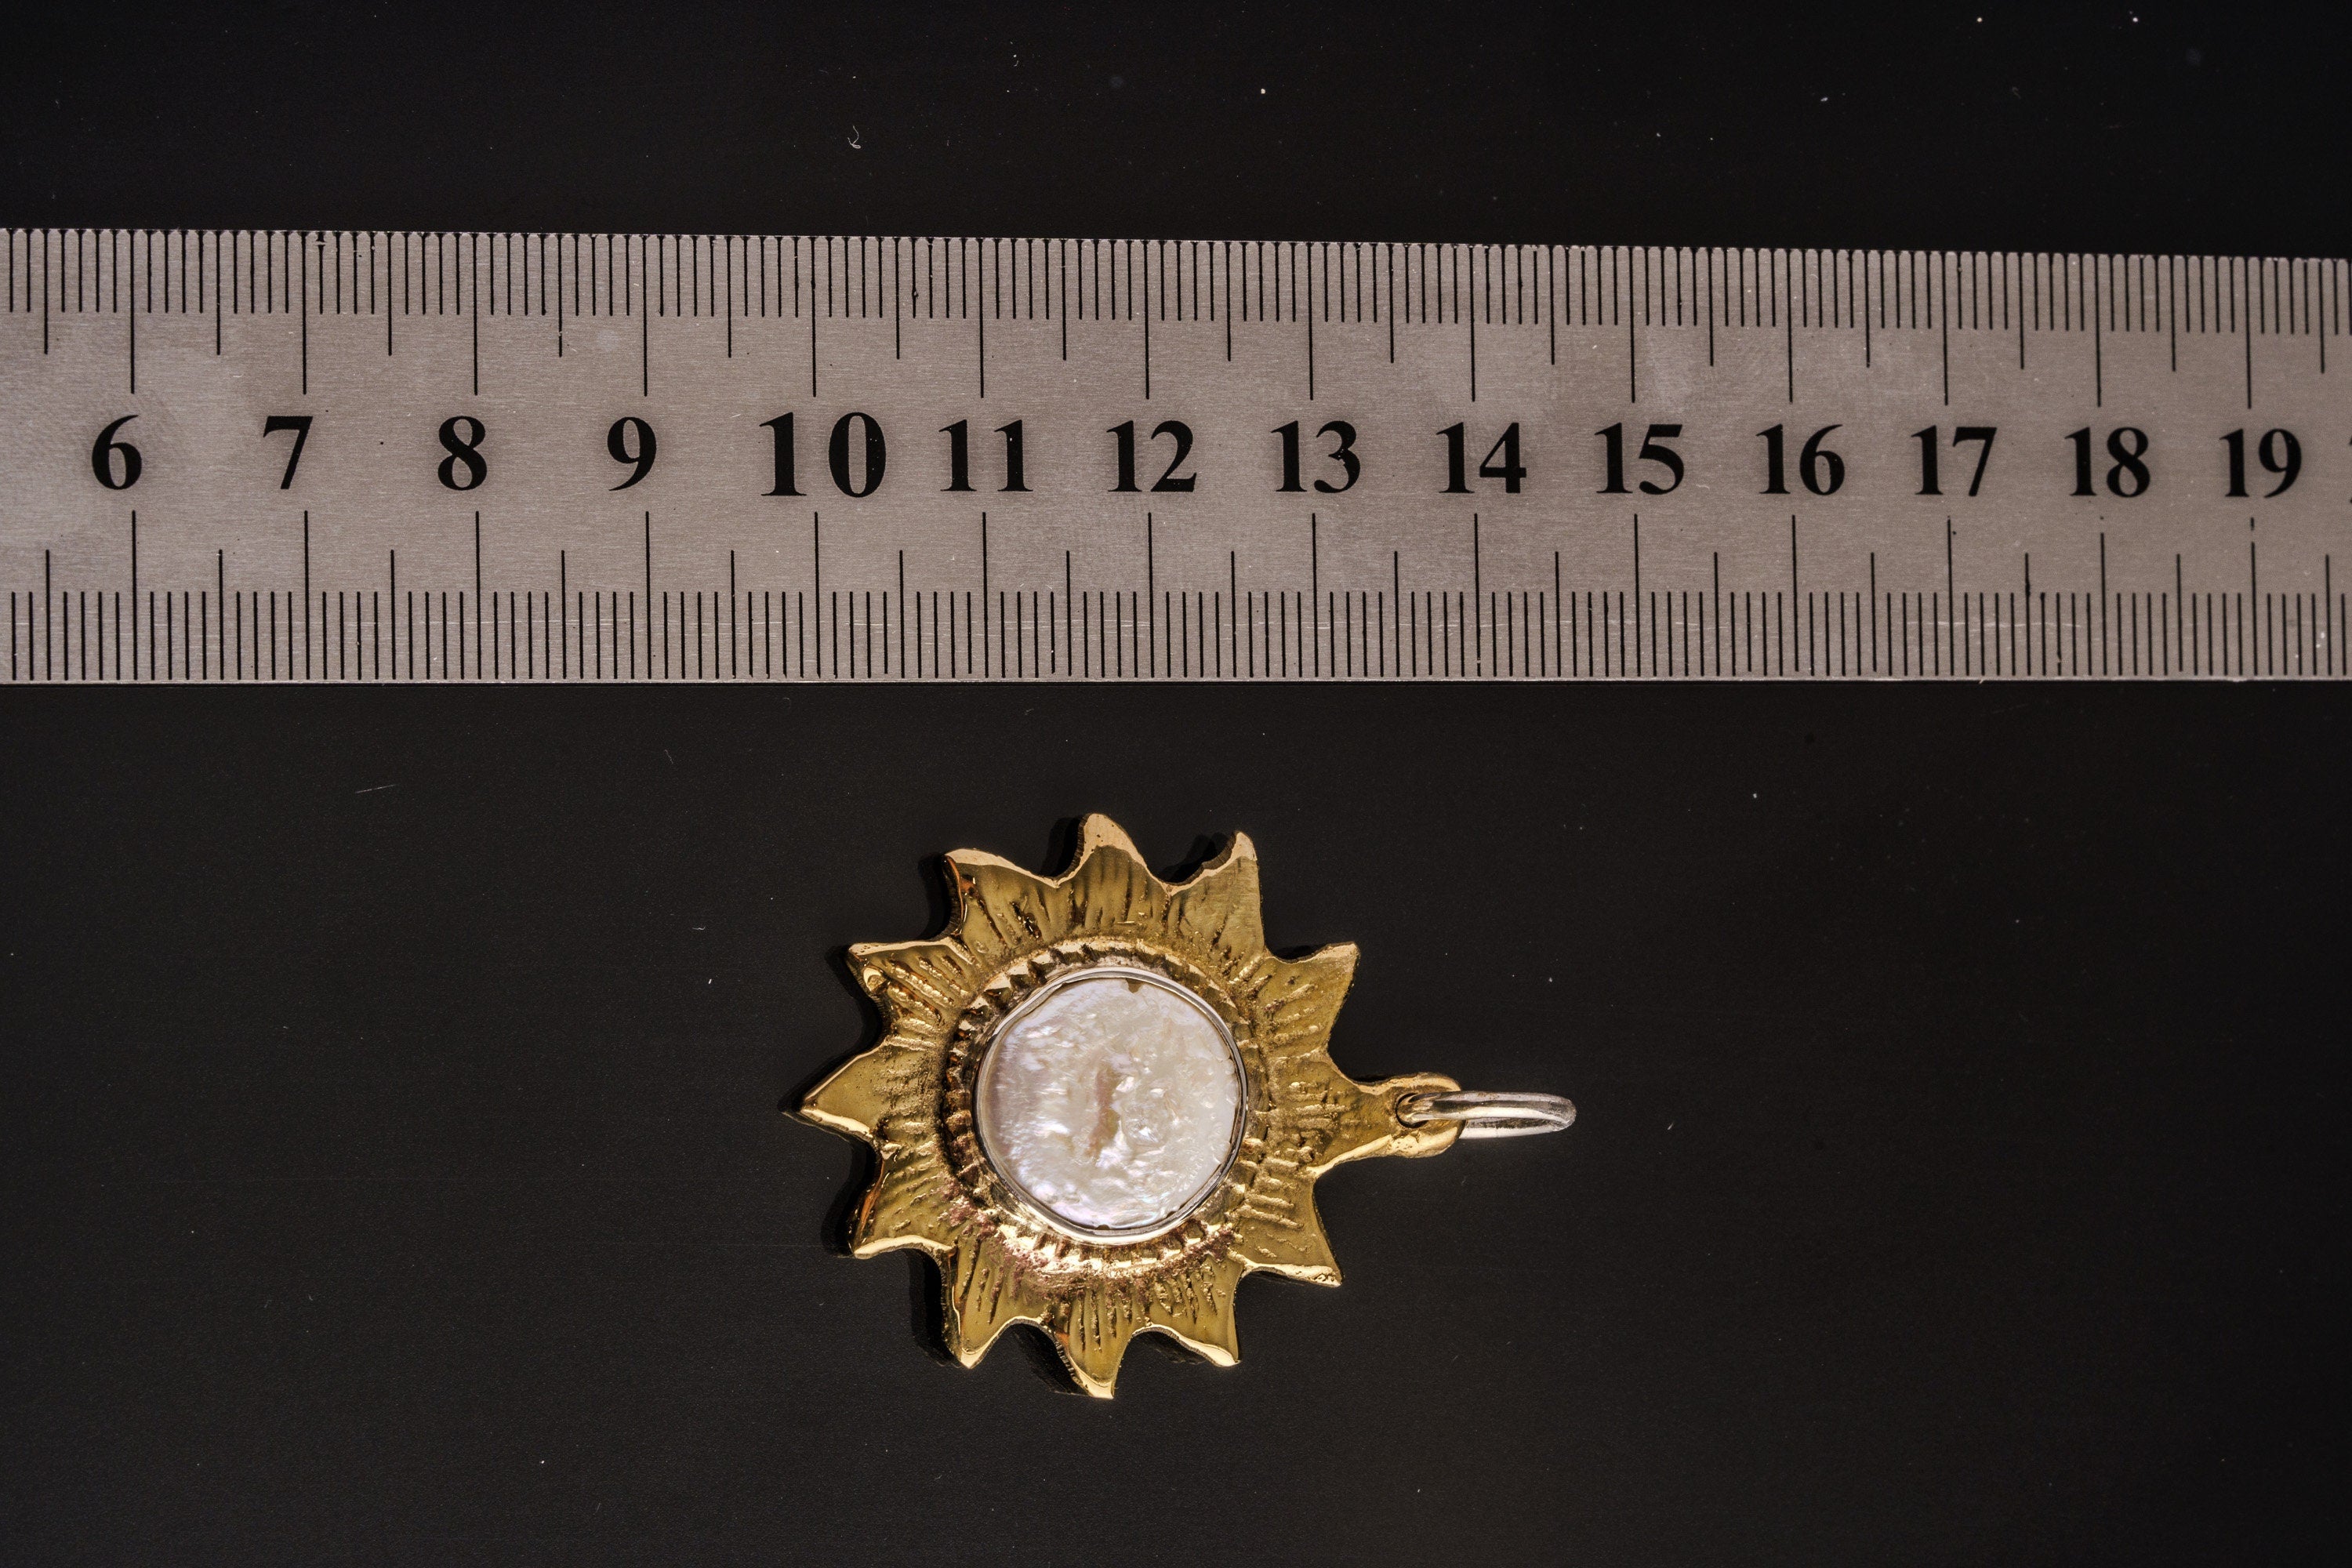 Lustrous Sunburst Pendant: Mother-of-Pearl Stone - Gold-toned Brass Pendant